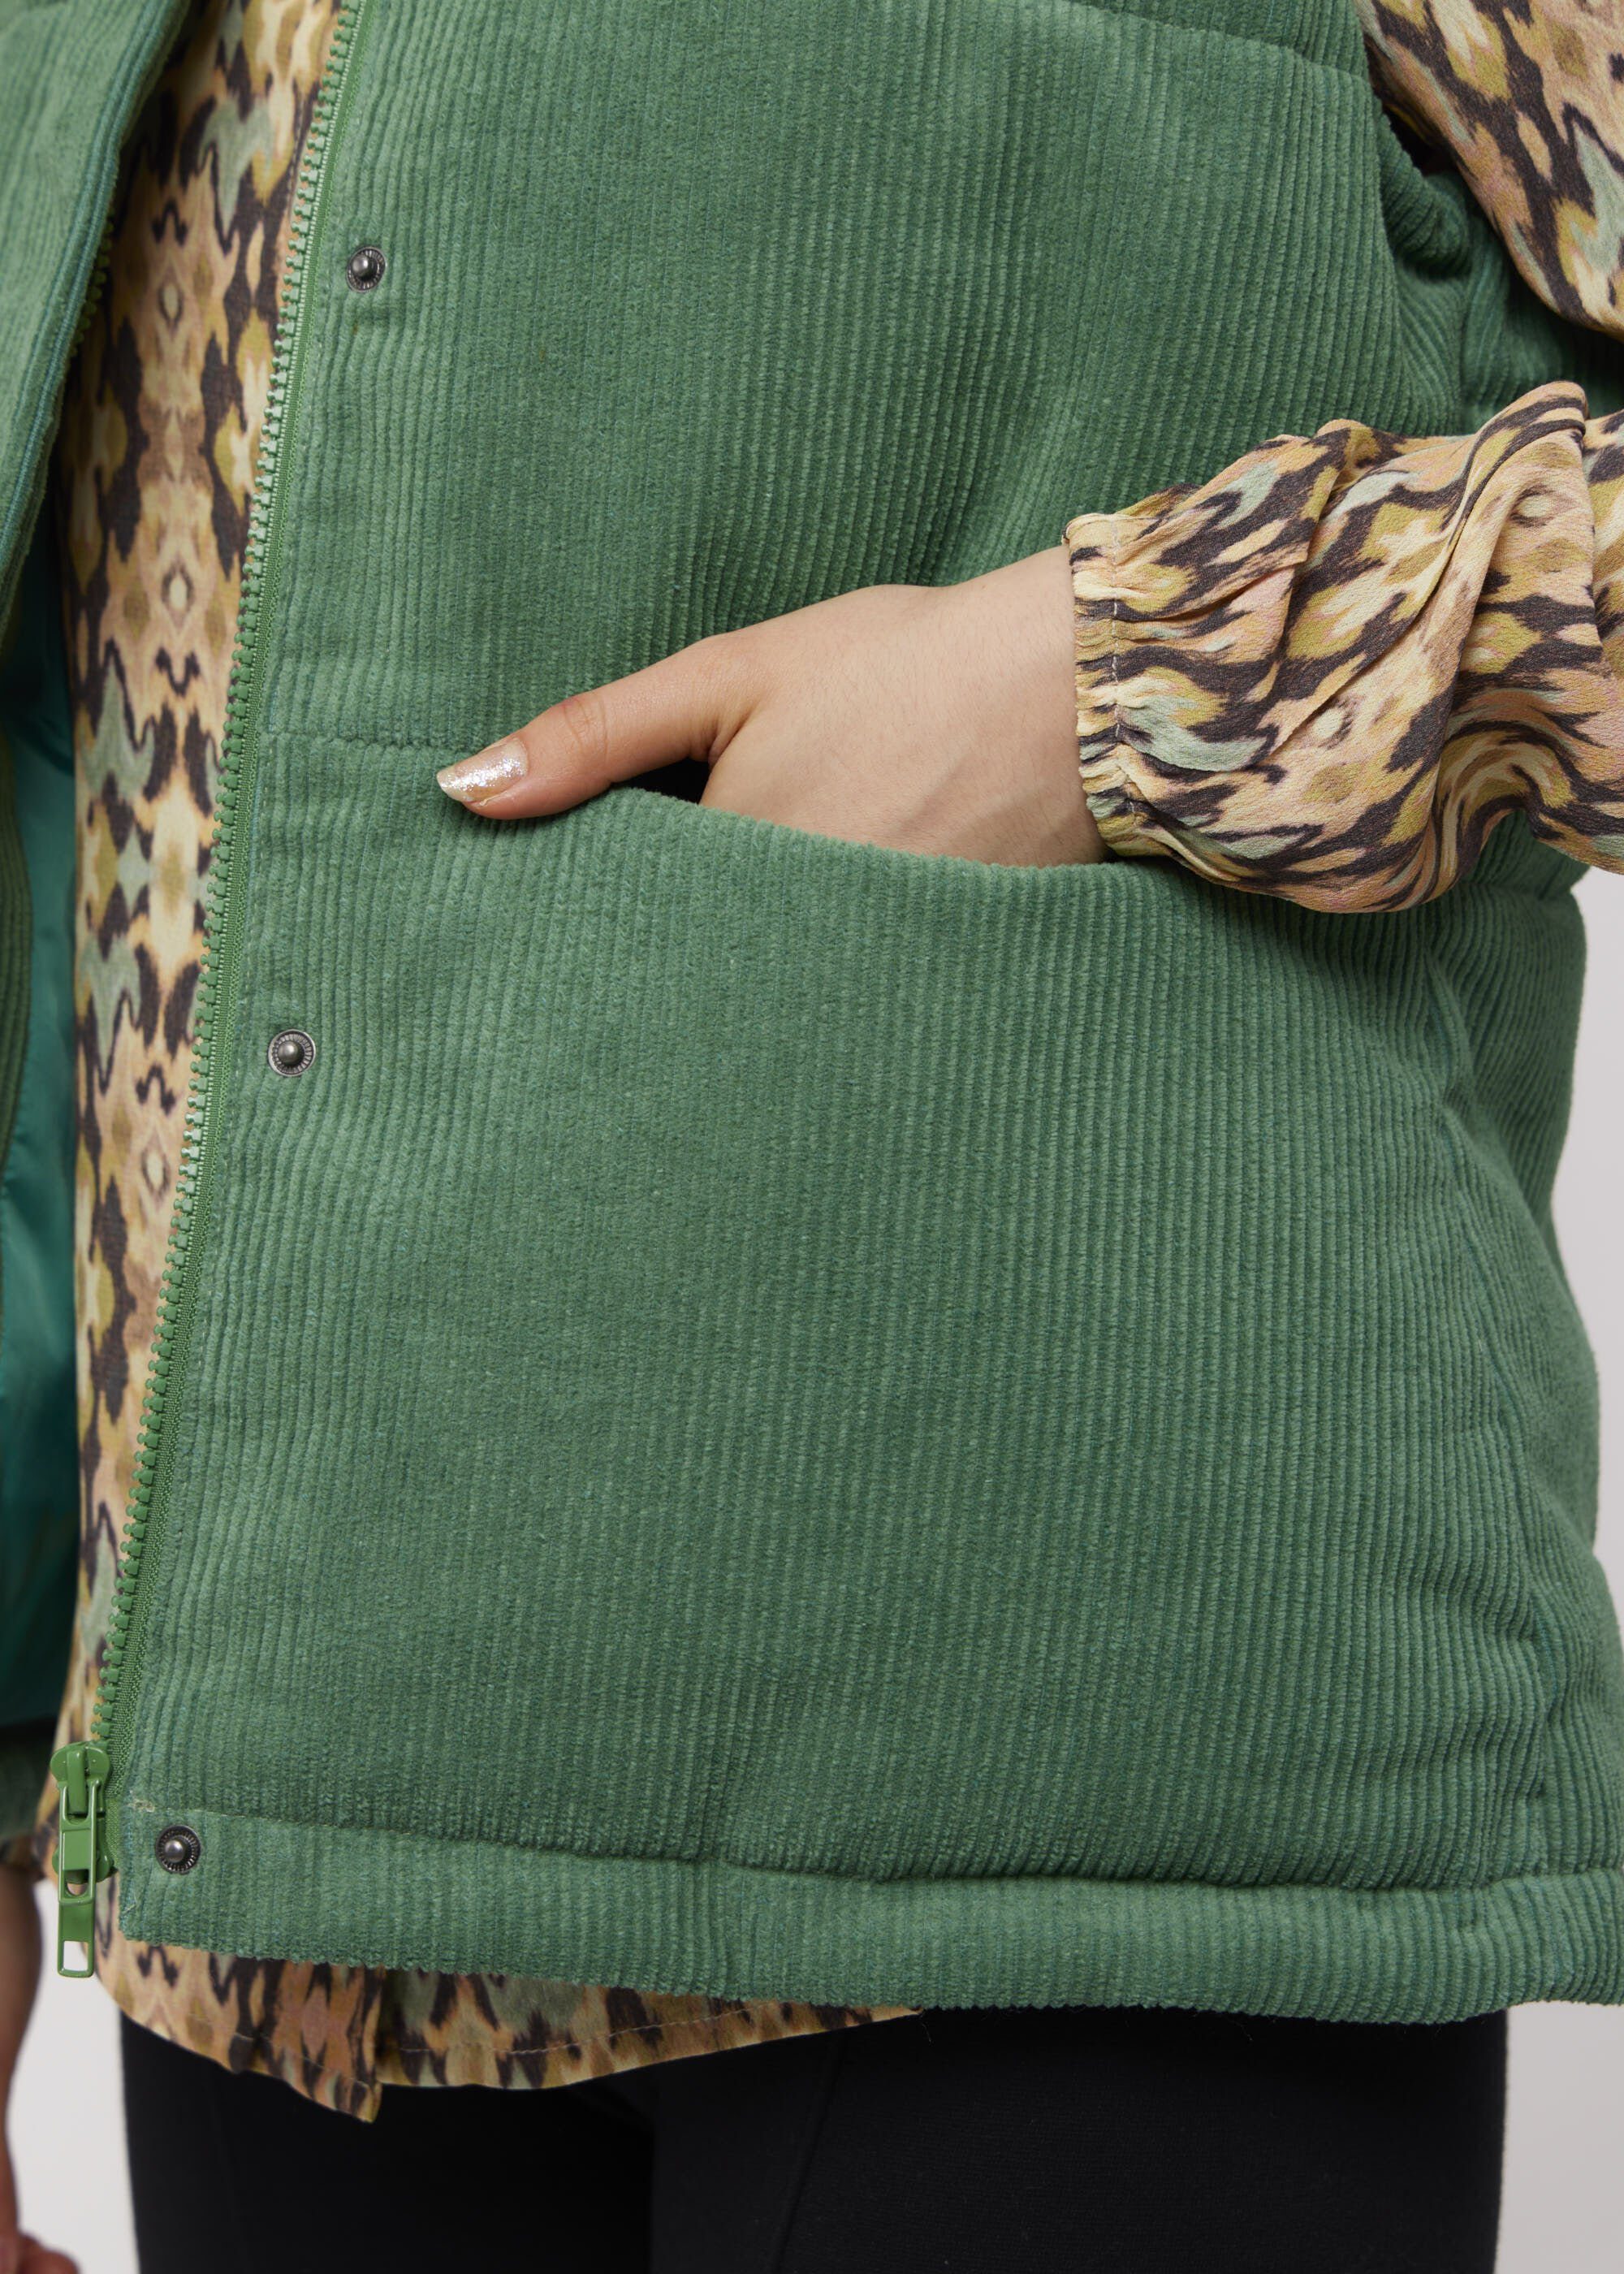 VICCI Germany Steppweste Cordweste aus Grün Baumwolle